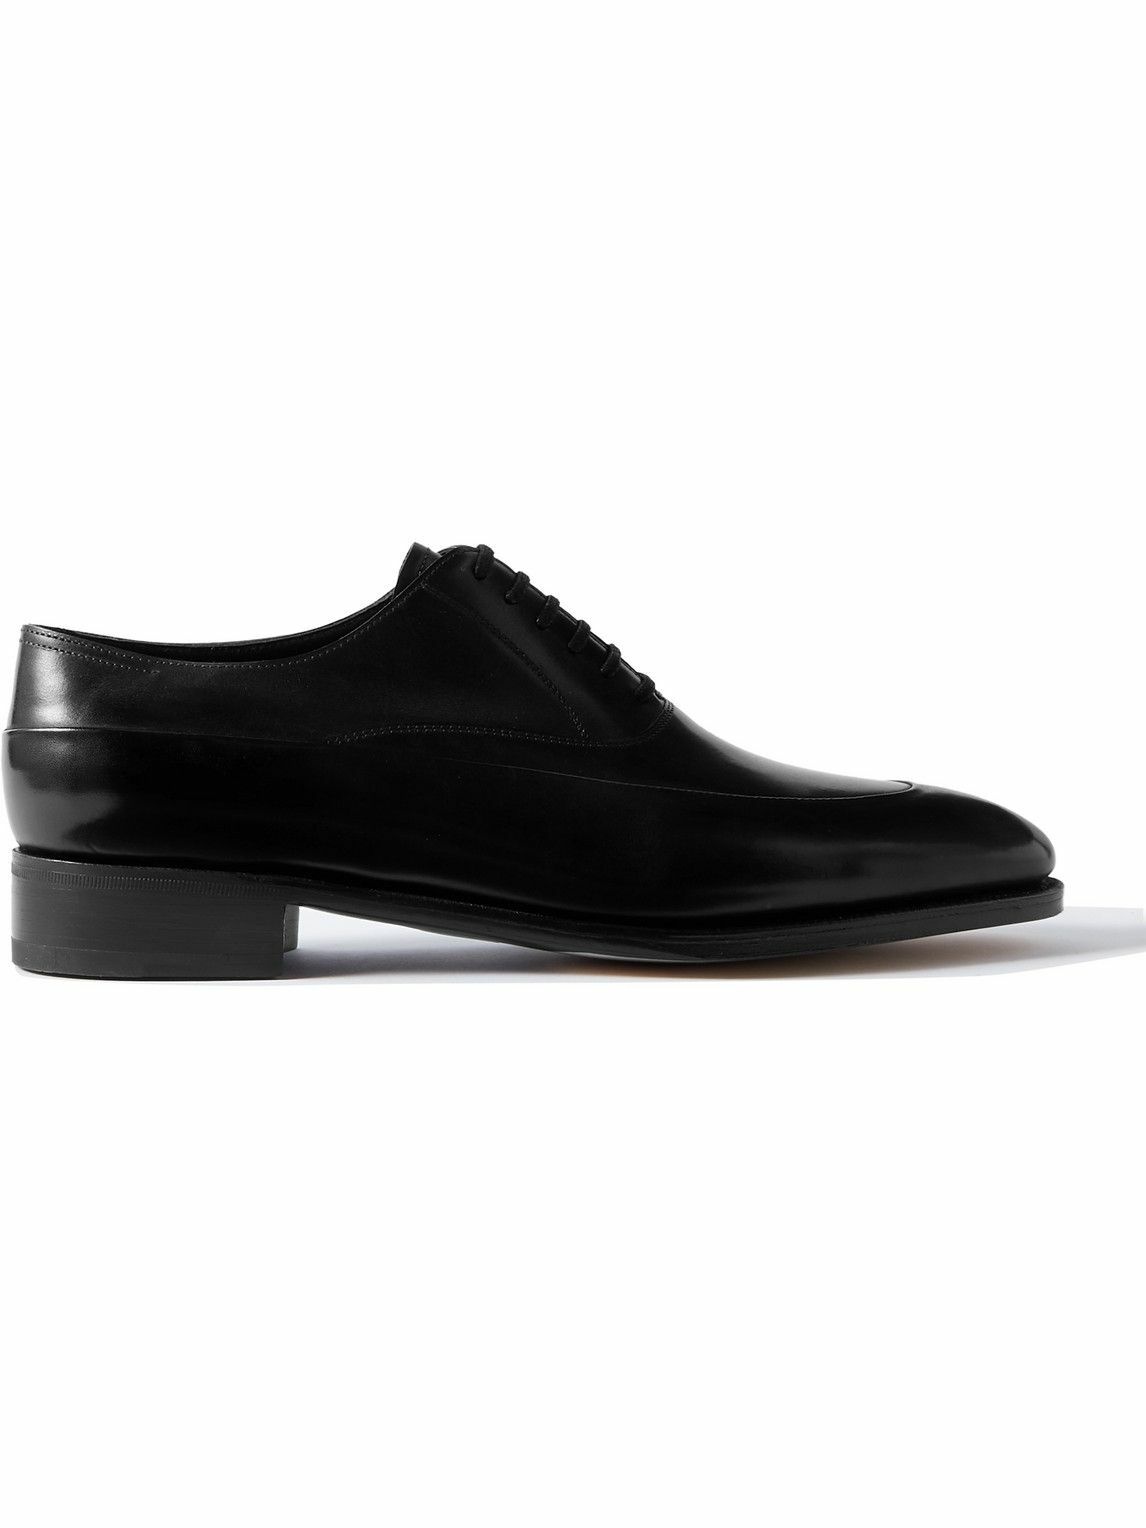 Photo: John Lobb - Edge Leather Oxford Shoes - Black